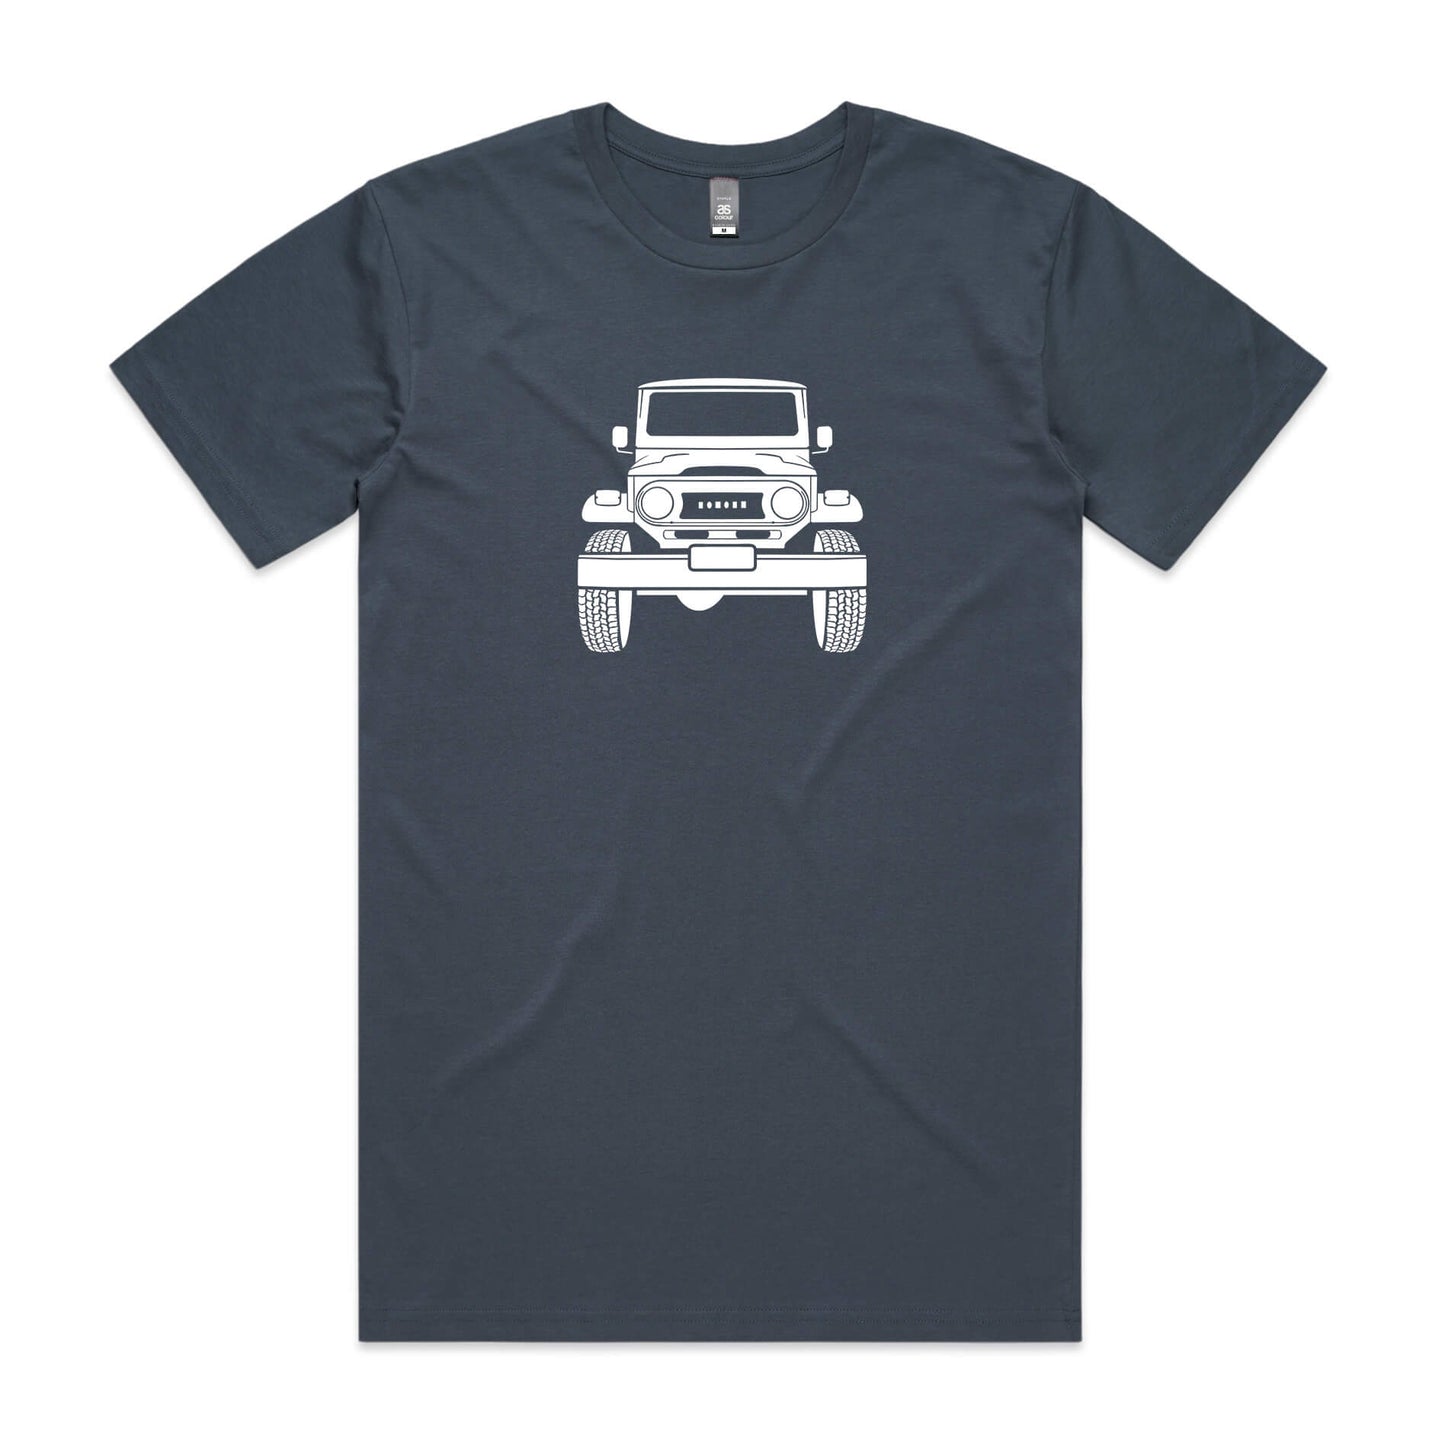 Toyota LandCruiser FJ40 t-shirt in petrol blue